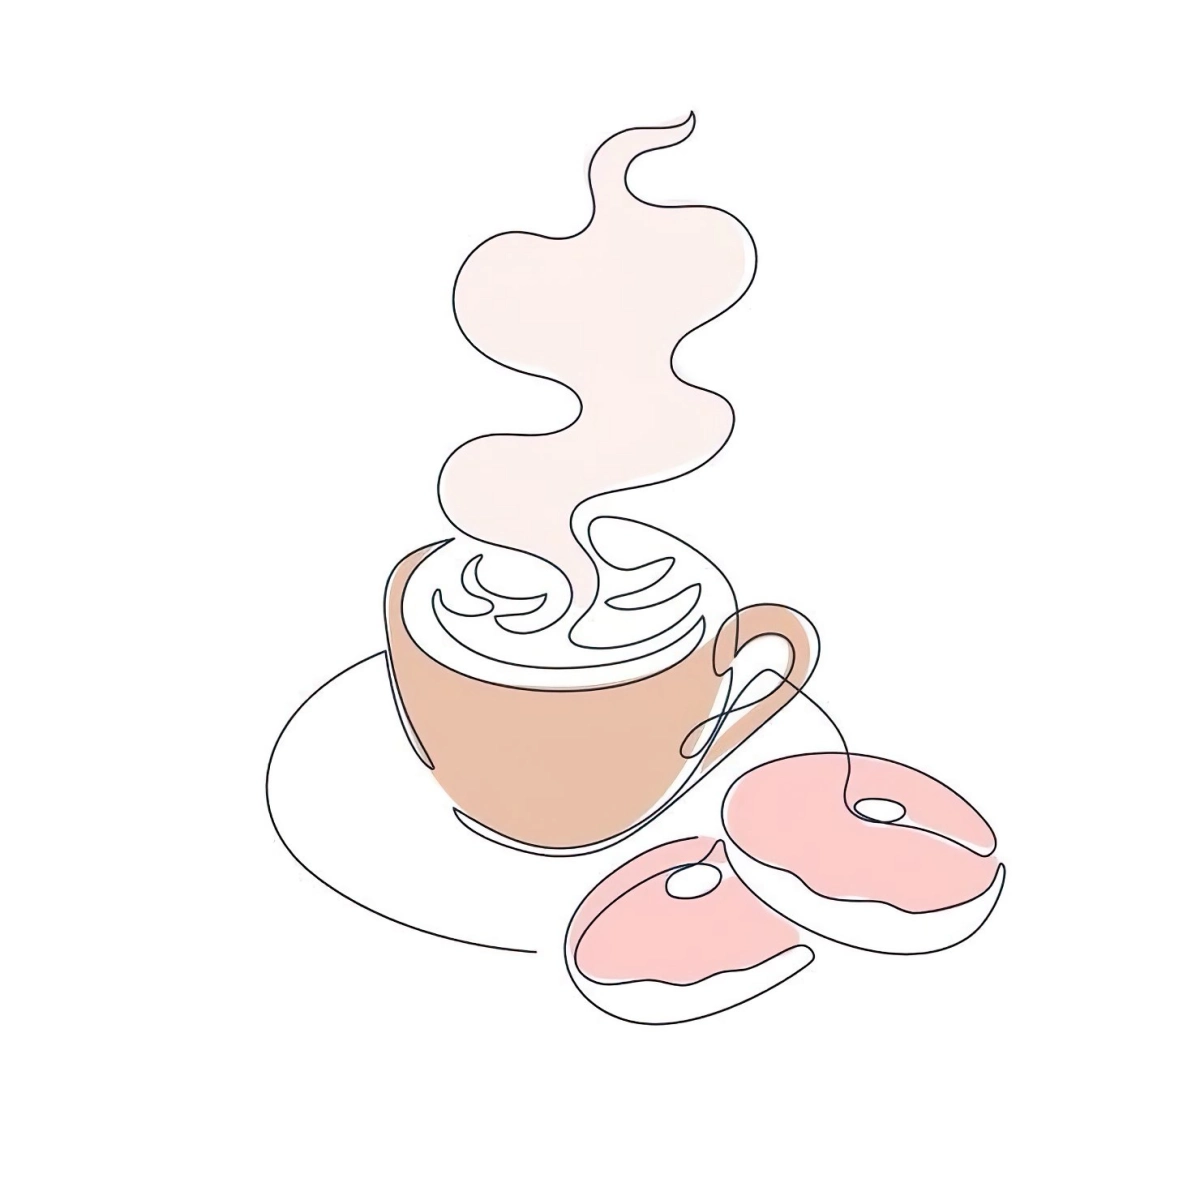 dessin aesthetic facile colore tasse de cafe chaude fumee donut rose glacage